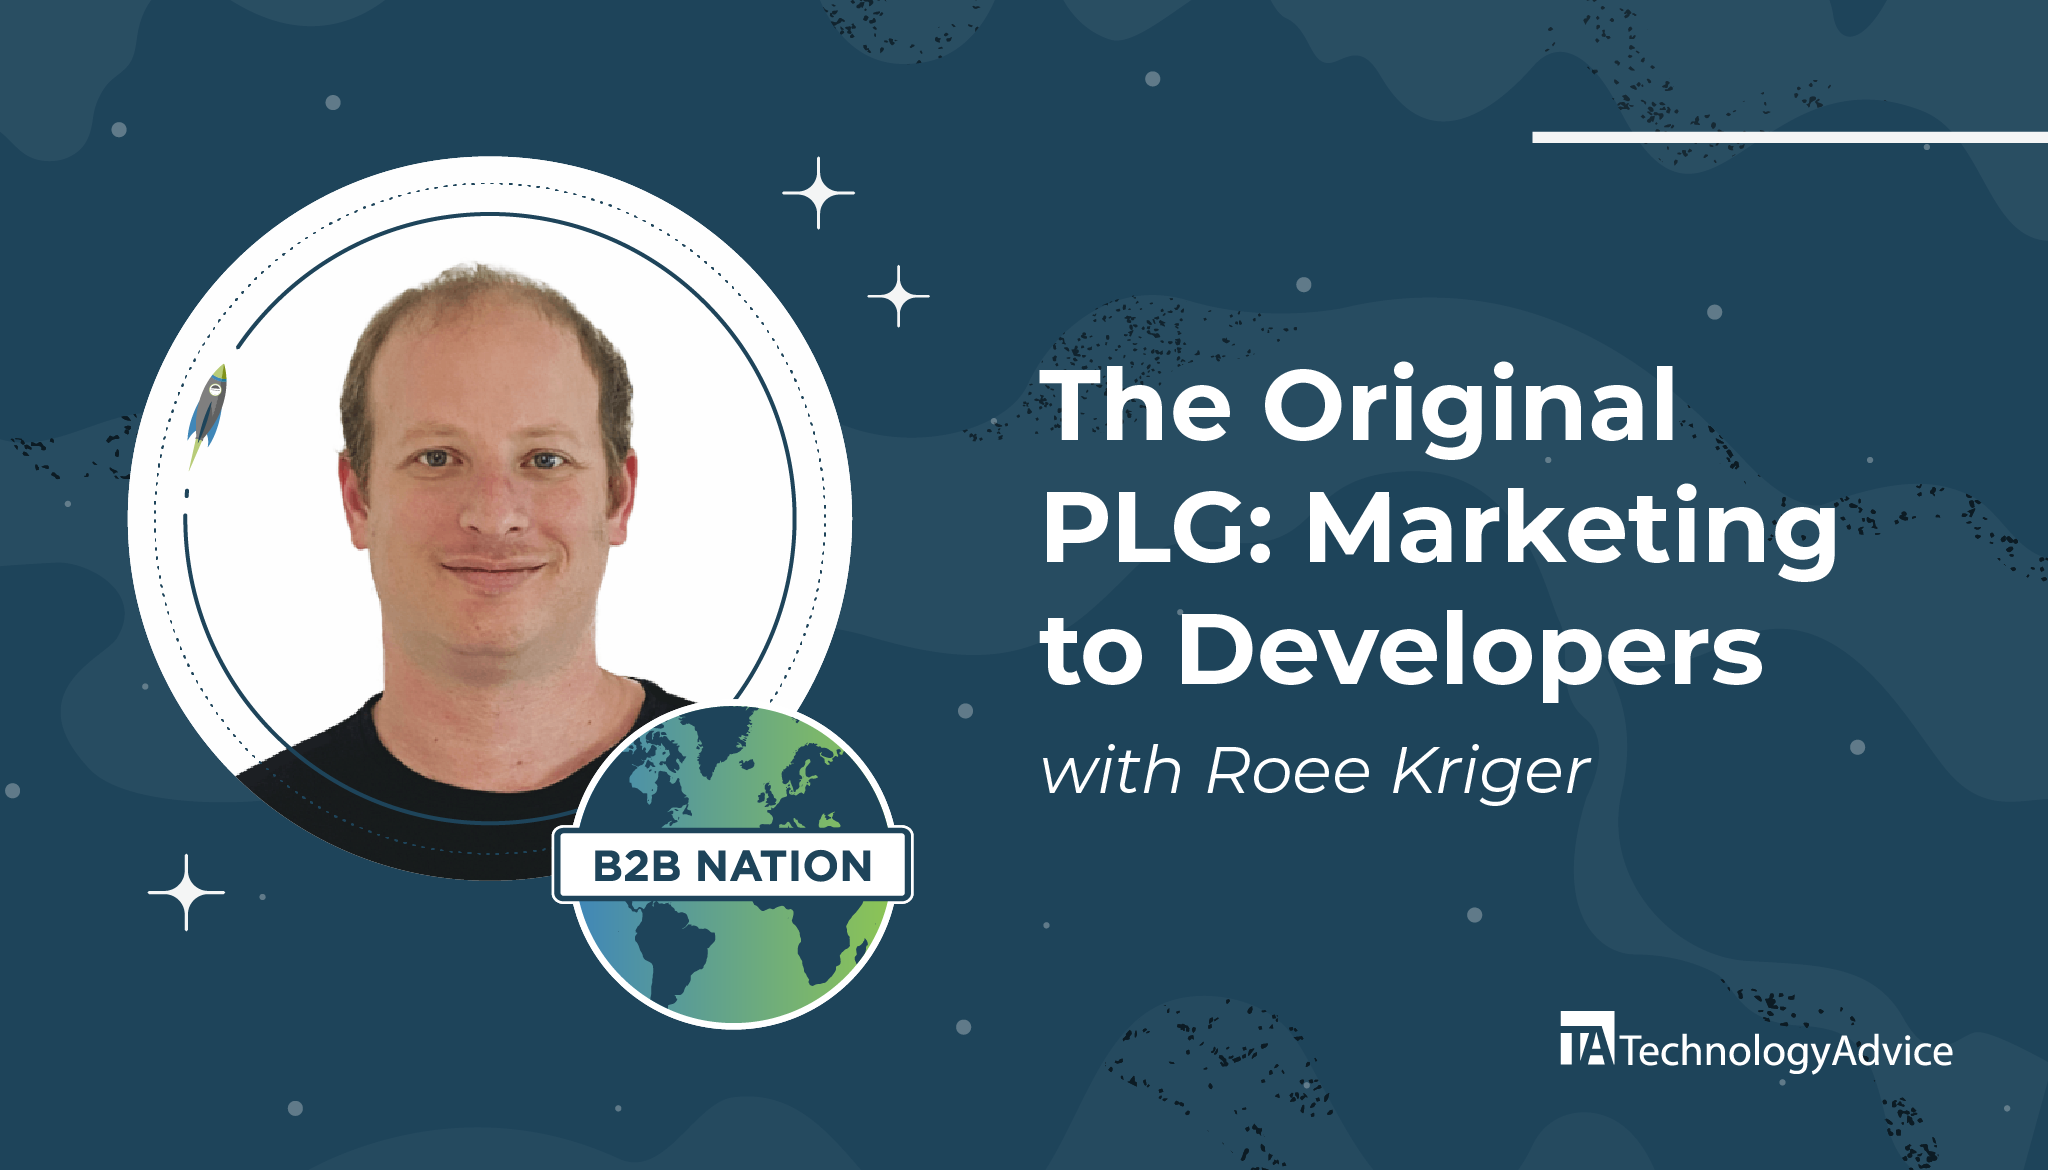 The Original PLG: Marketing to Software Developers